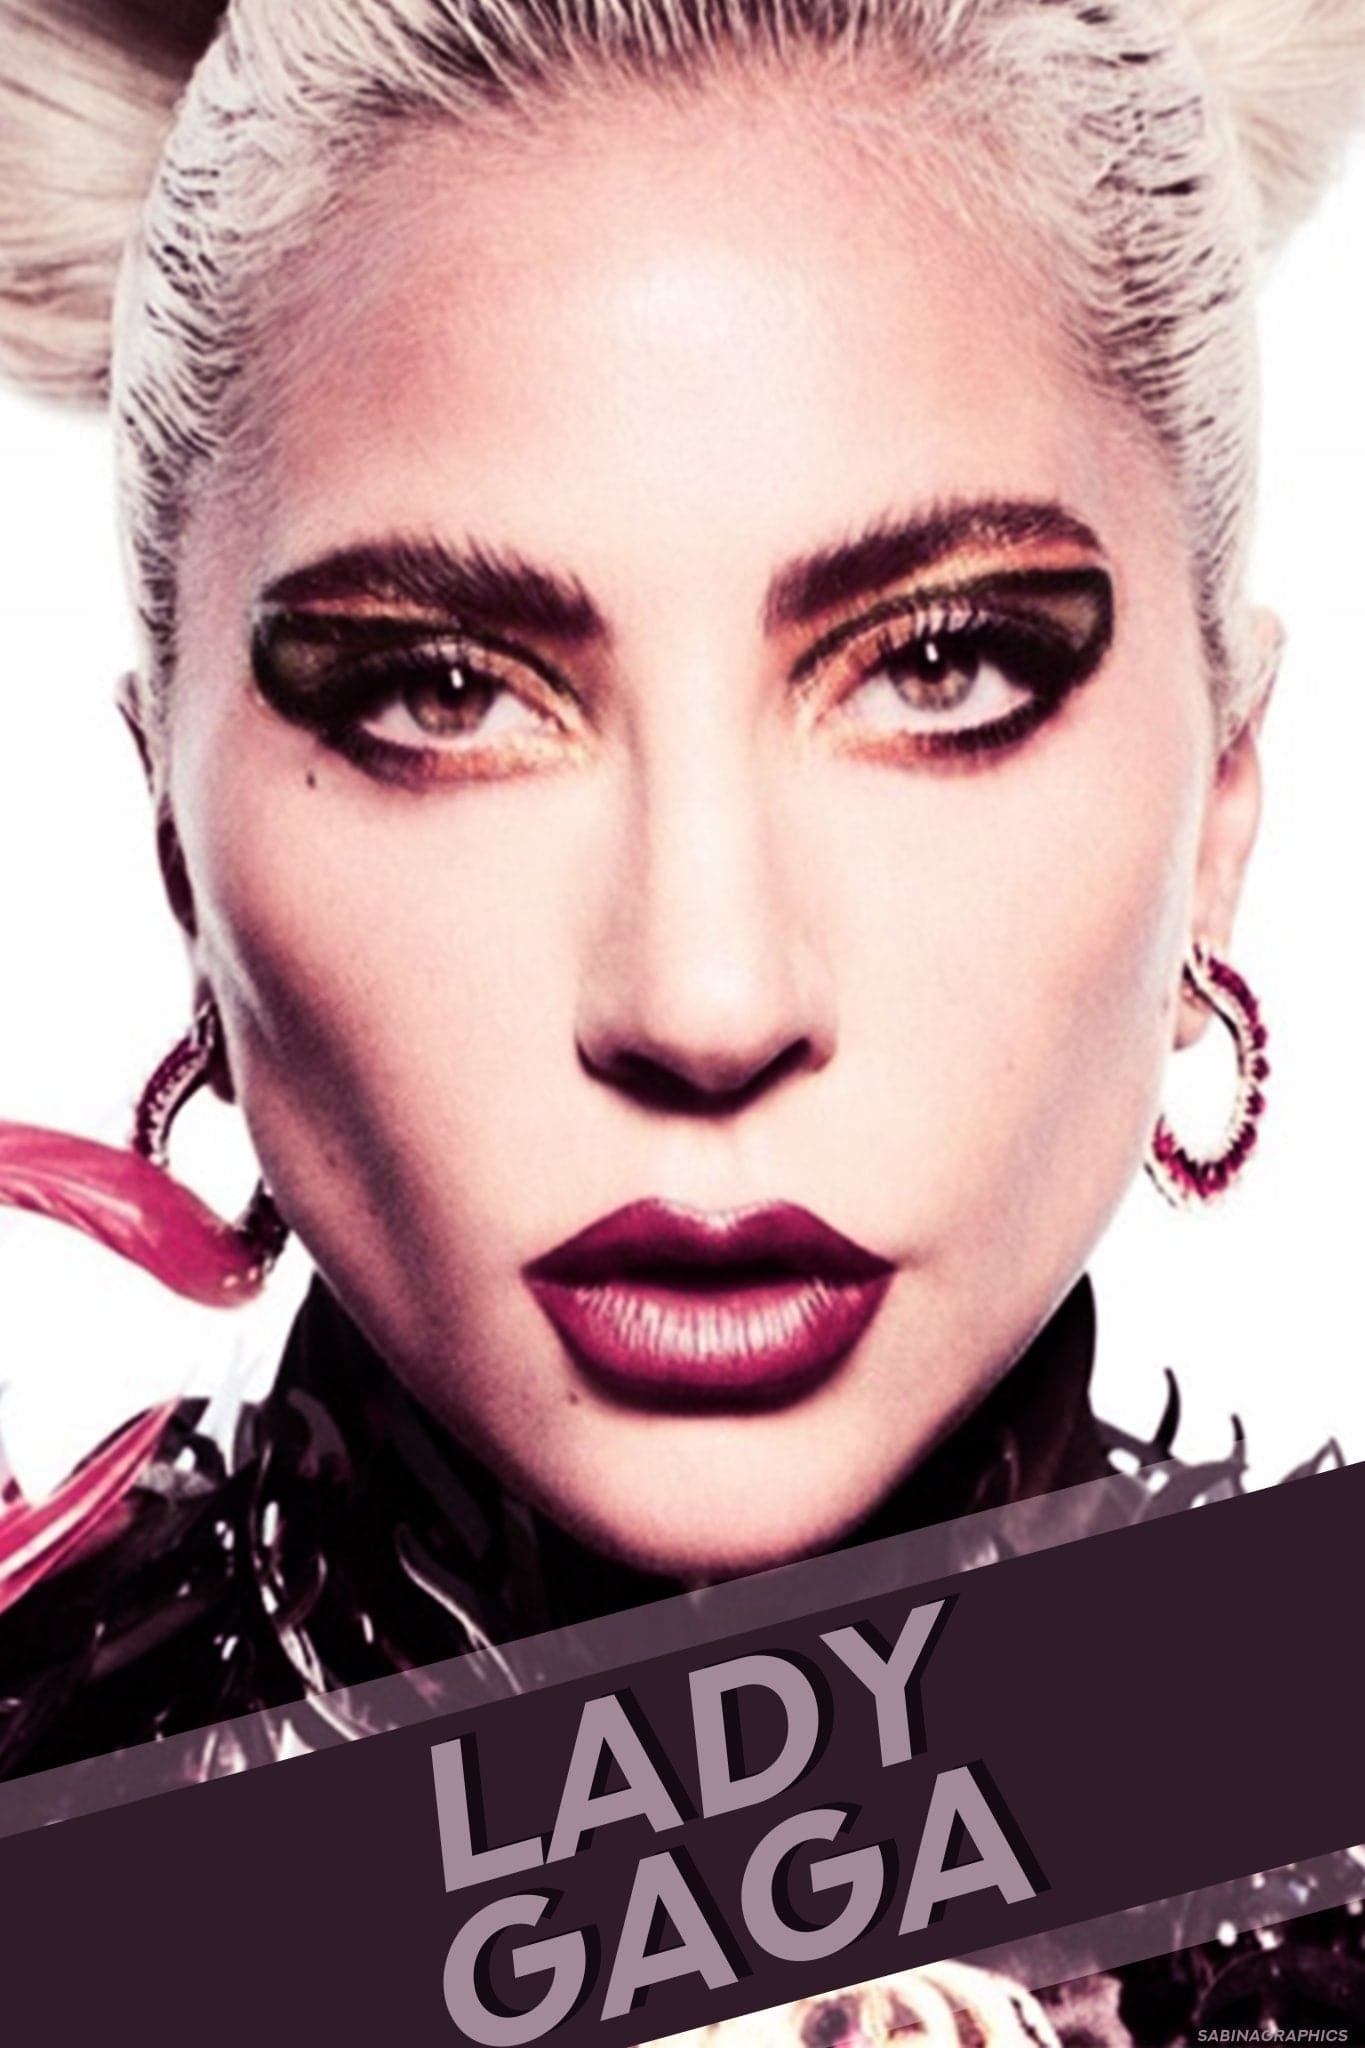 Lady Gaga 'Glamour Shot' Poster - Posters Plug